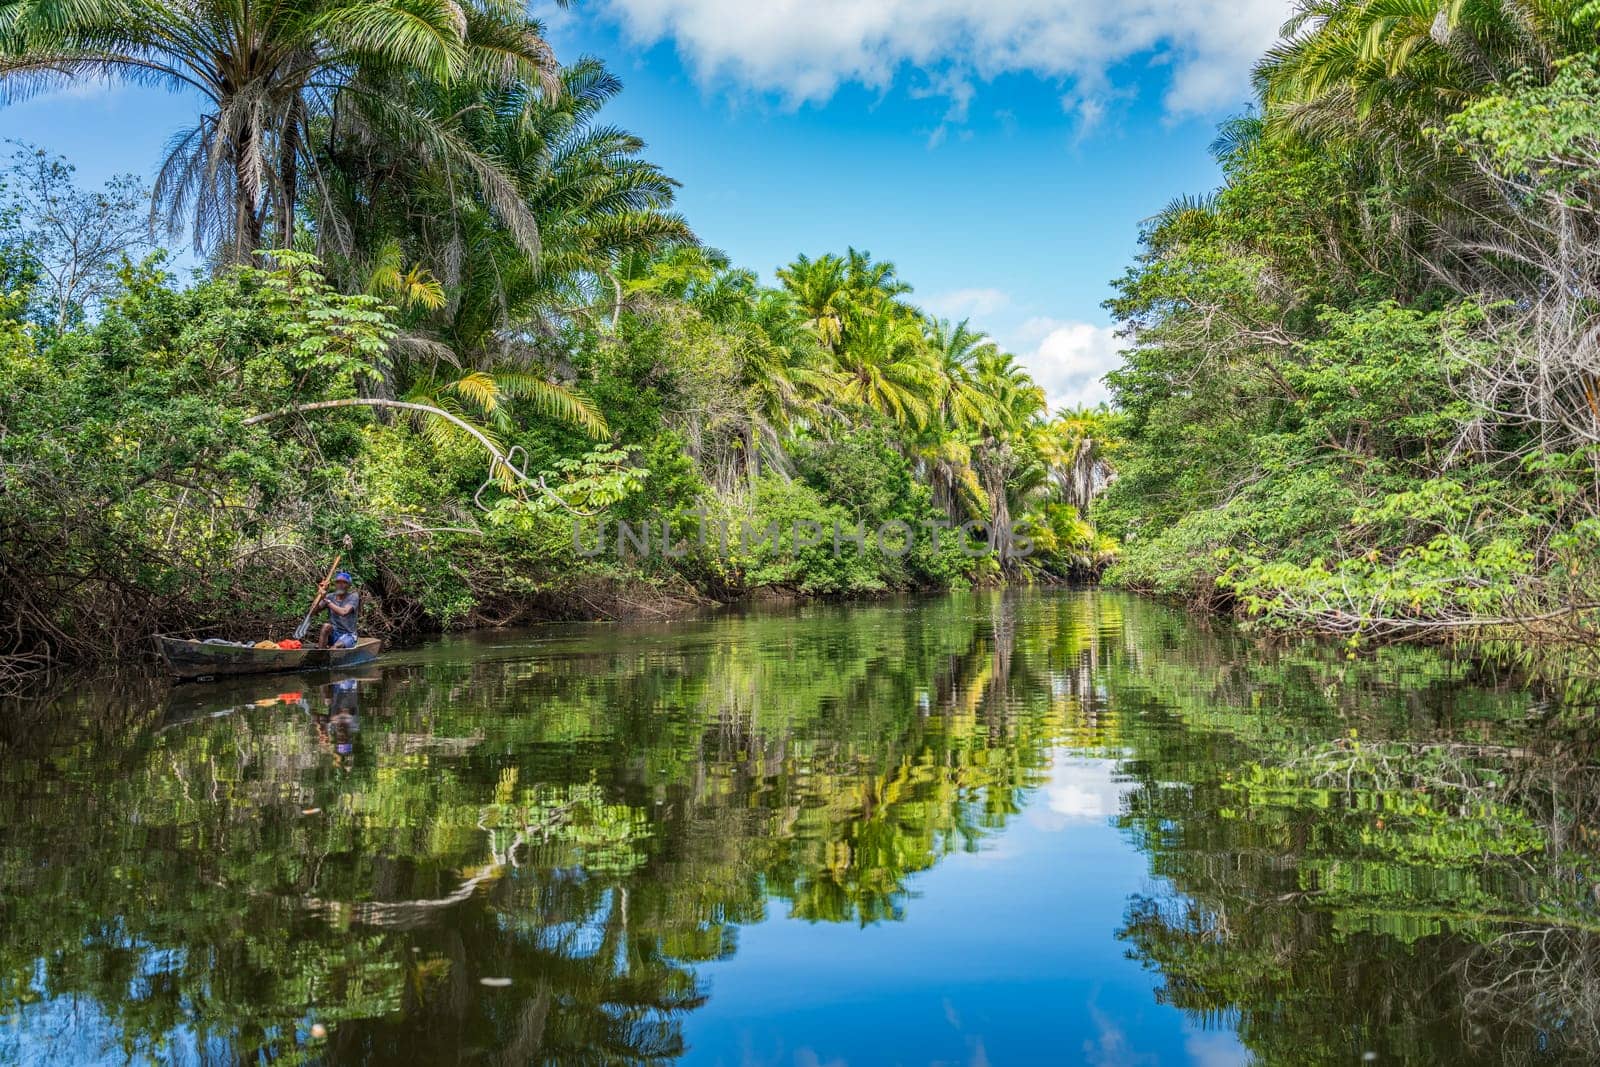 Traditional Kayaker enjoying a serene river in lush tropical jungle.